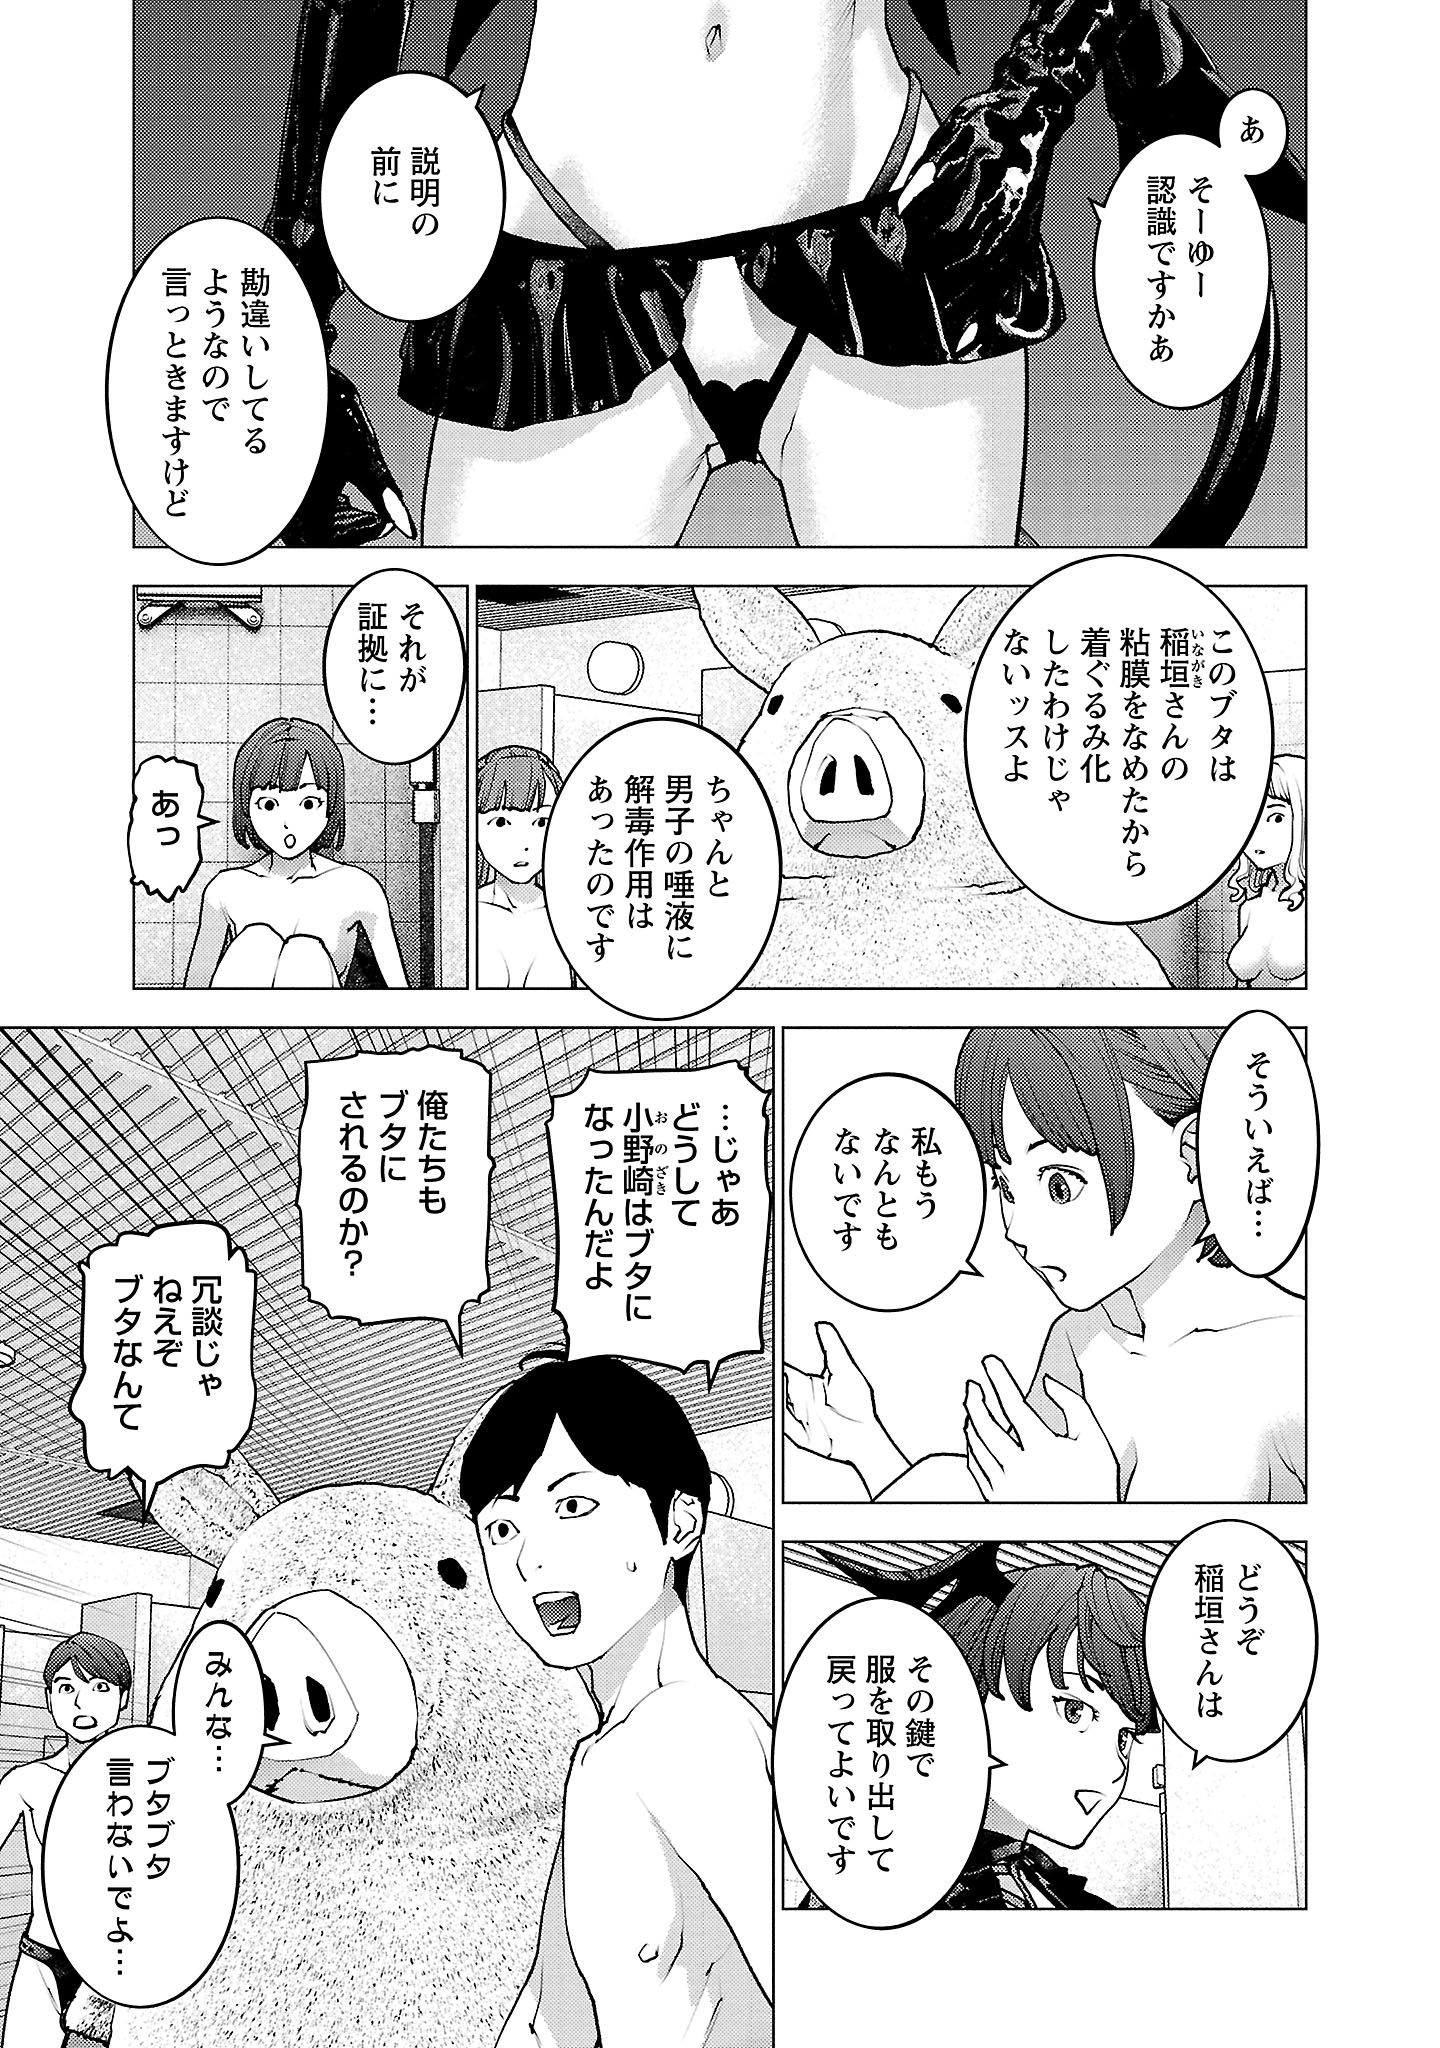 Seishokuki - Chapter 129 - Page 3